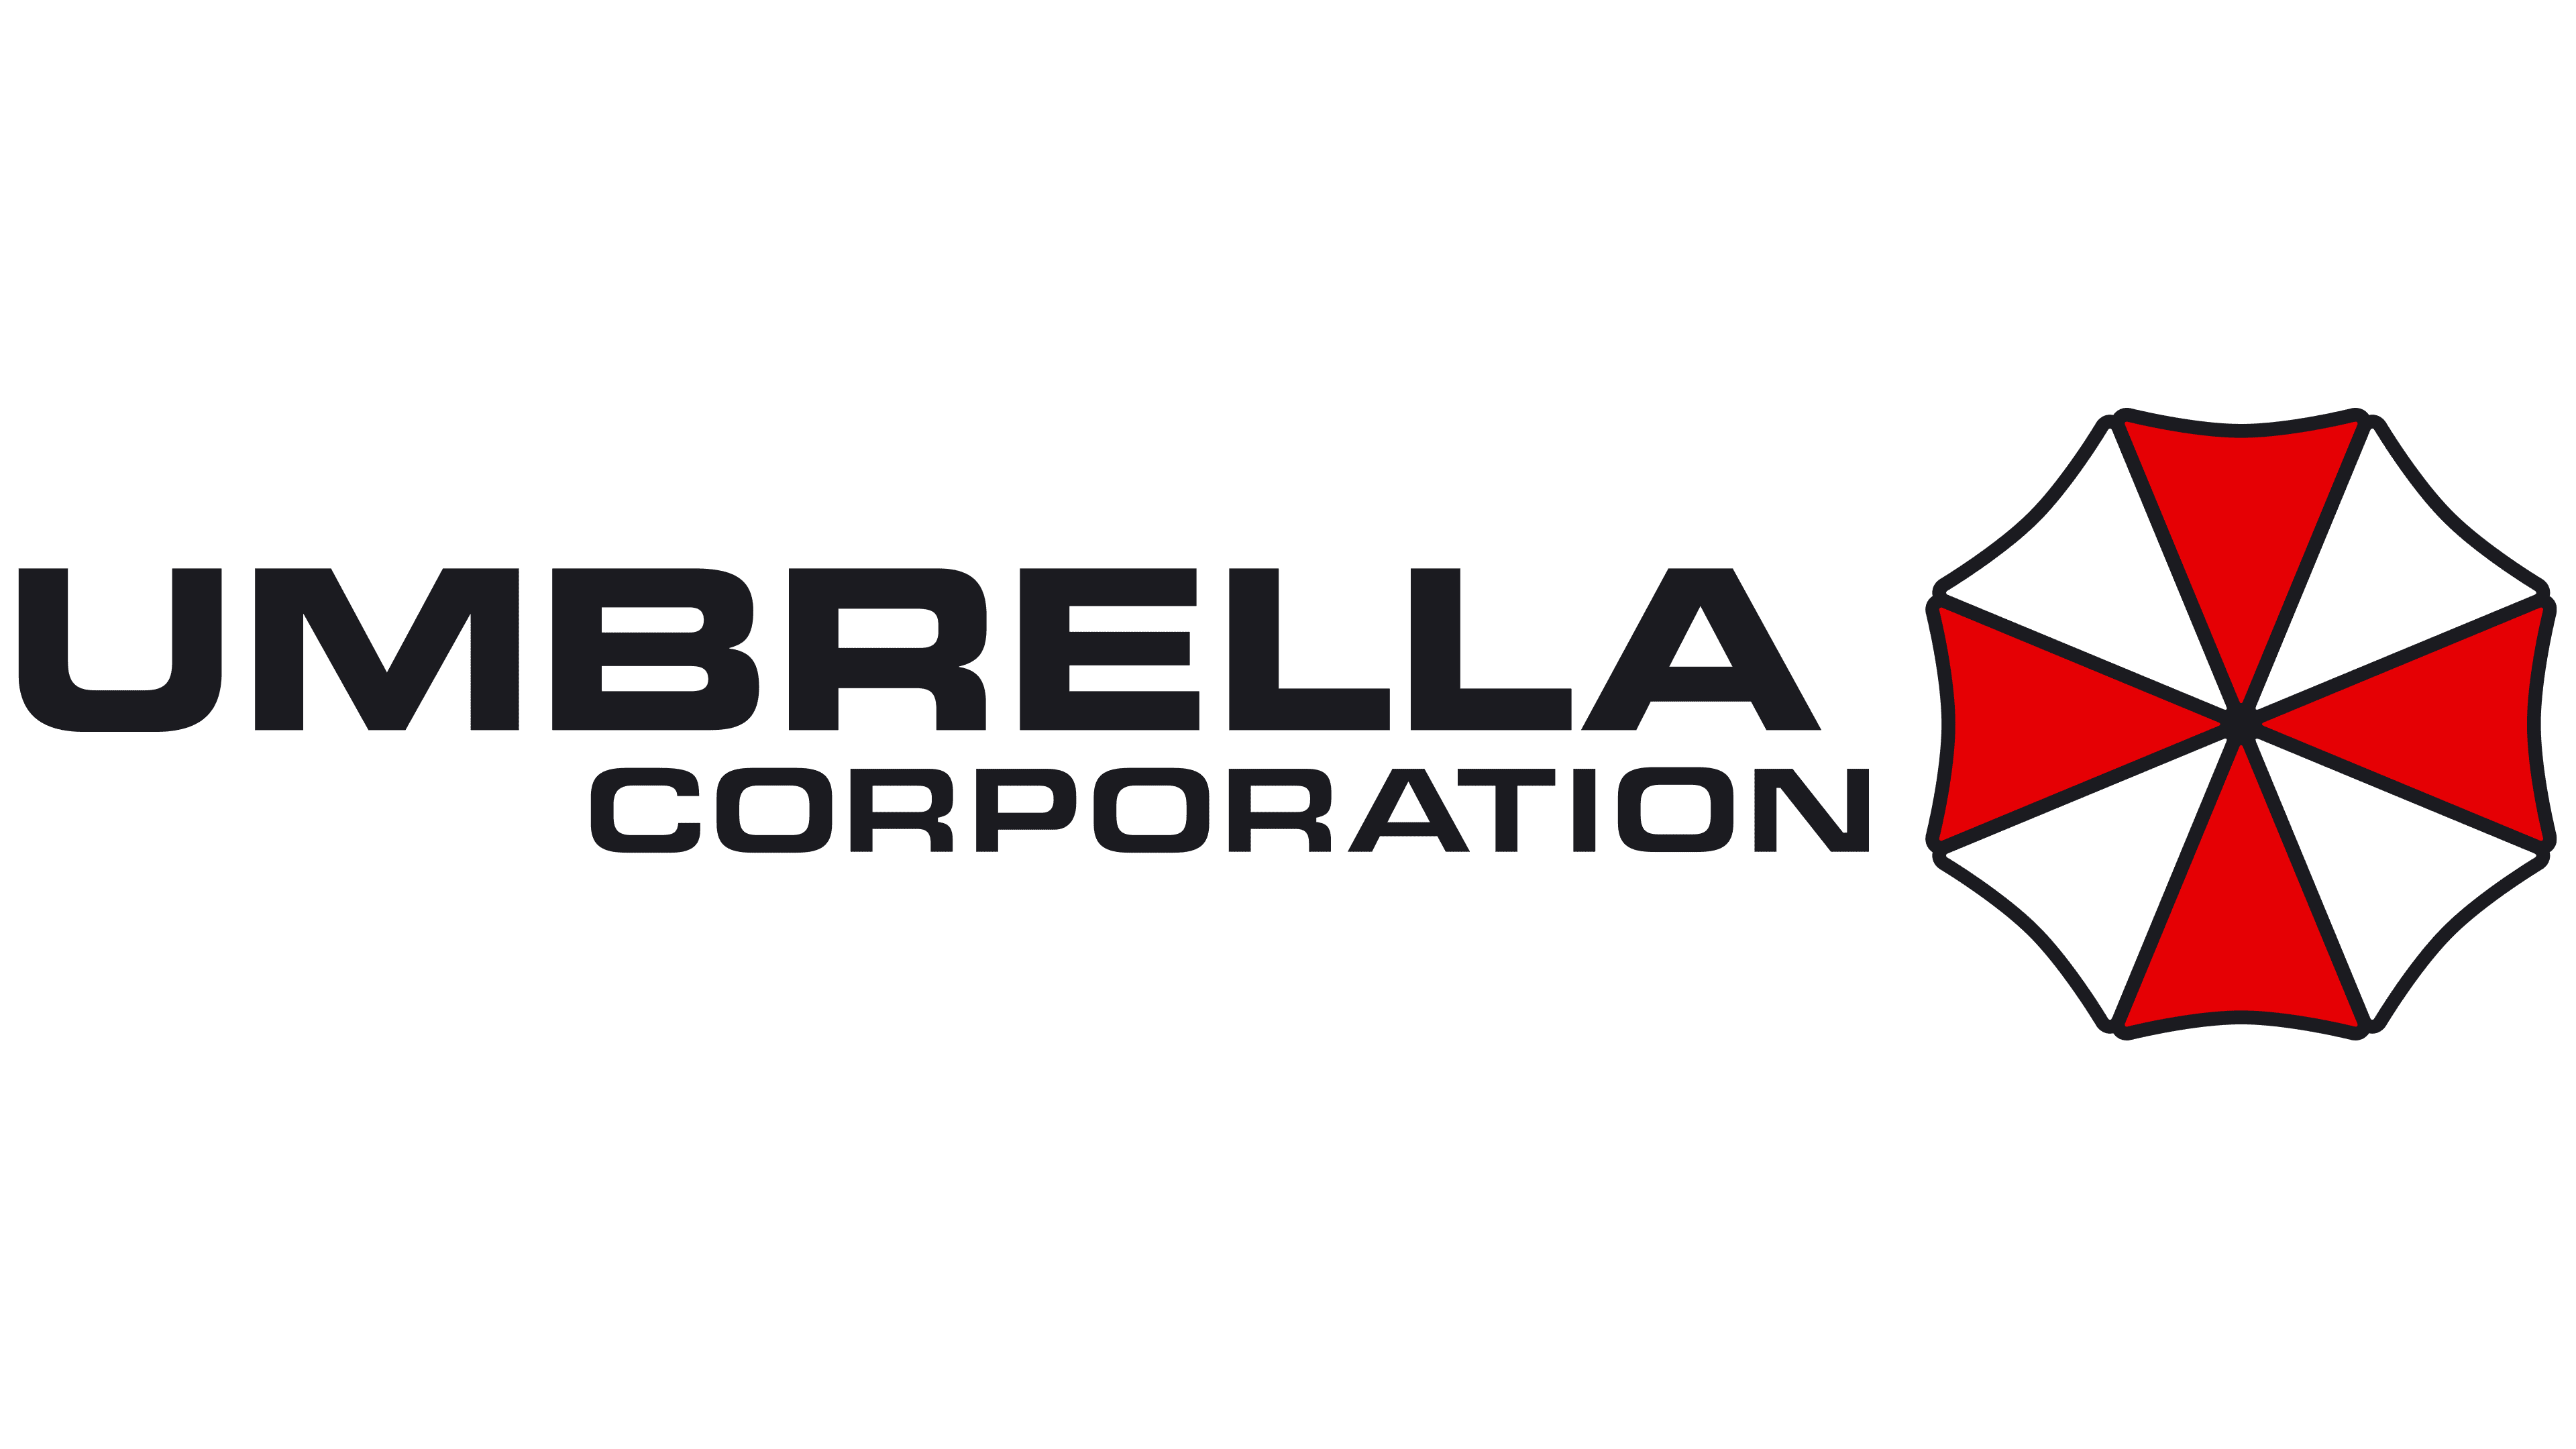 Umbrella Corporation Logo, symbol, meaning, history, PNG, brand